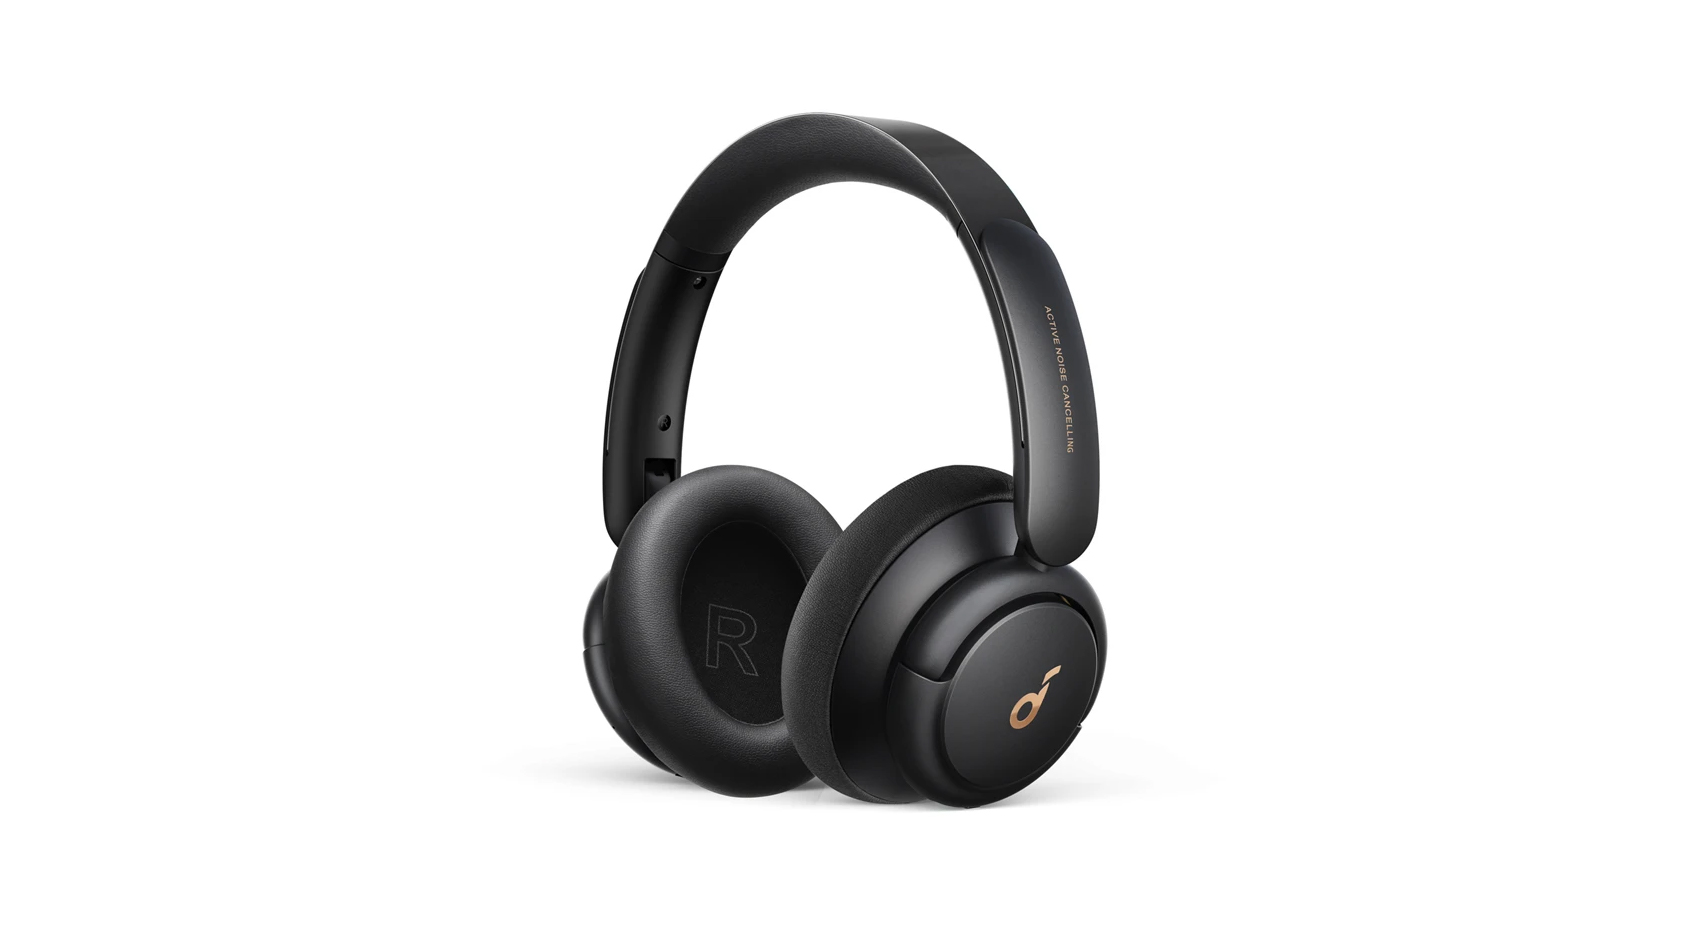 Anker Soundcore Life Q30 noise canceling headphones against a white backdrop